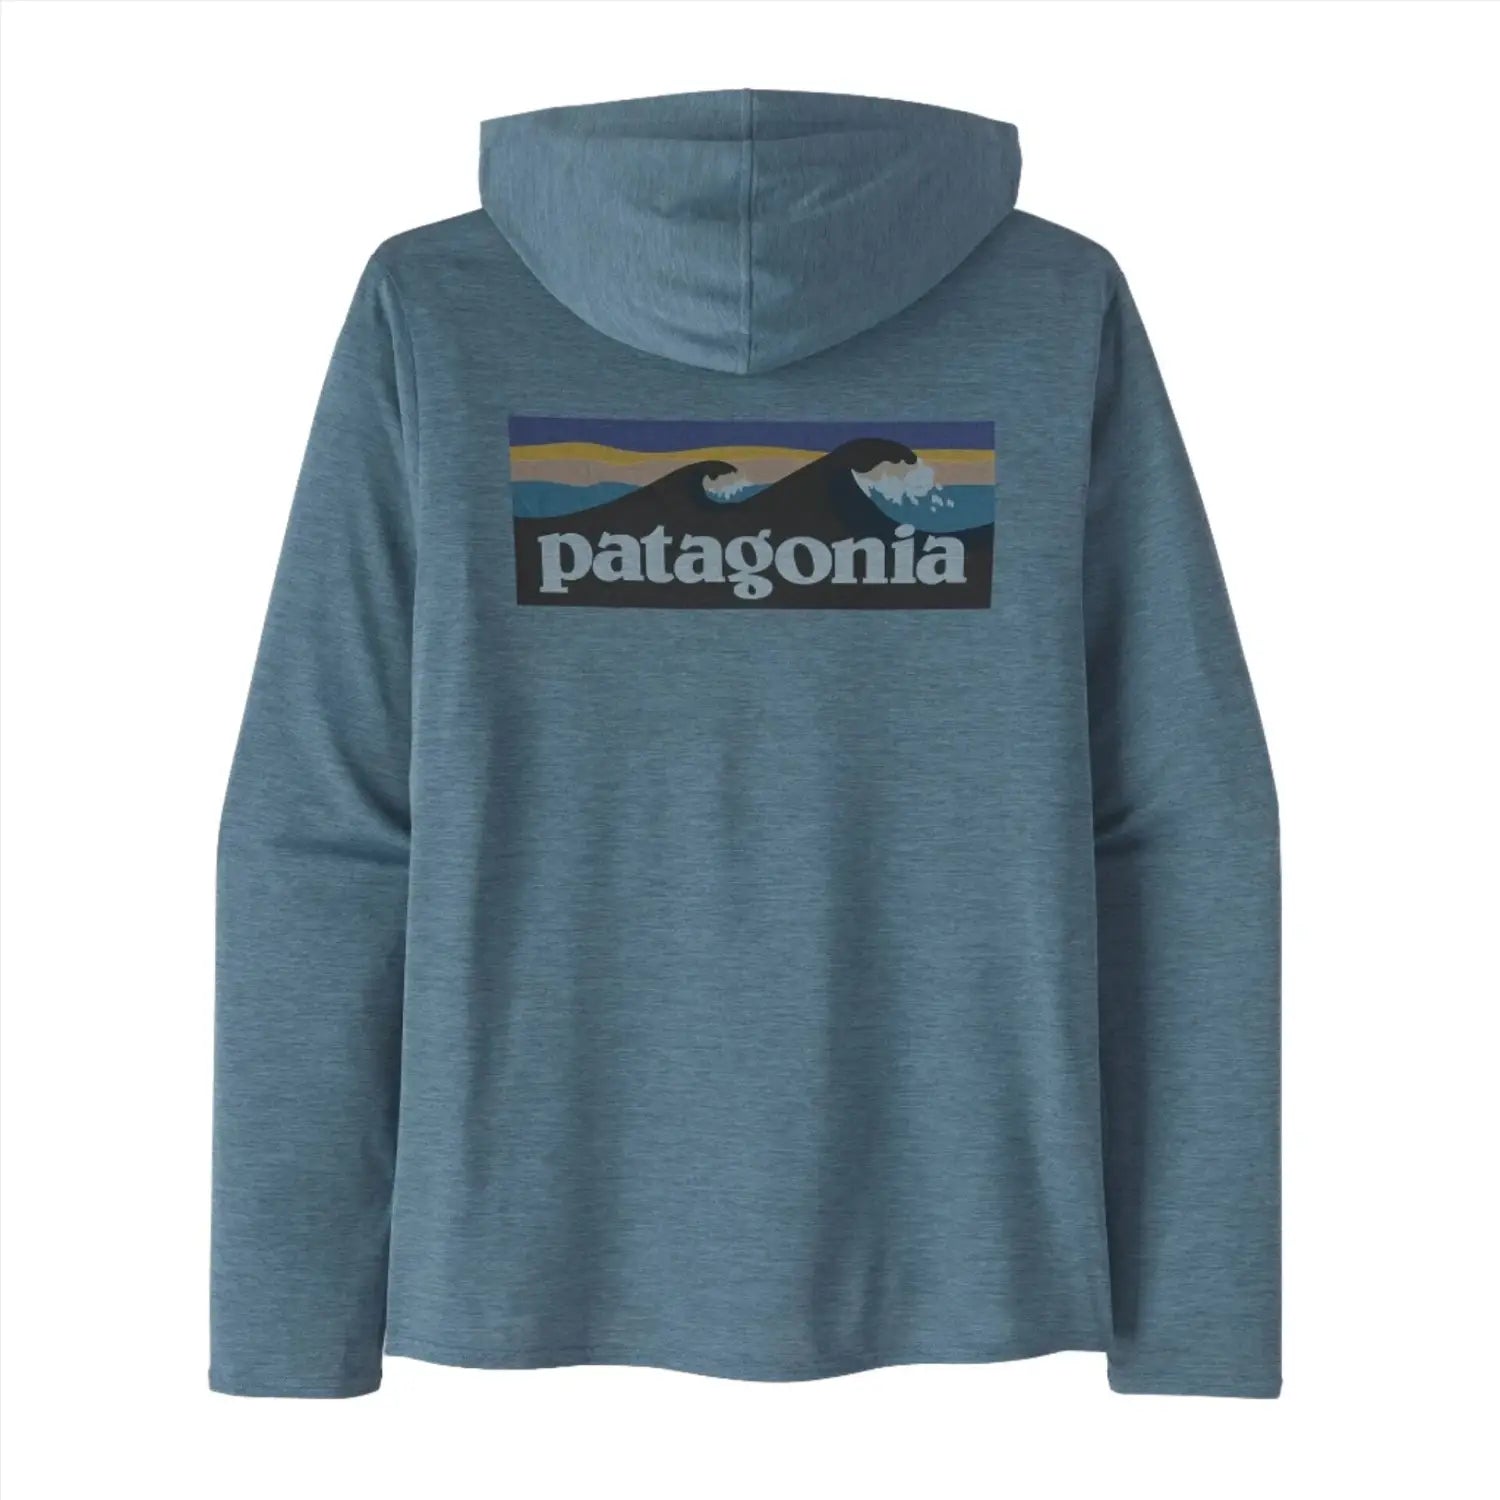 Patagonia M's Capilene® Cool Daily Graphic Hoody, Boardshort Logo: Utility Blue X-Dye, back view flat 